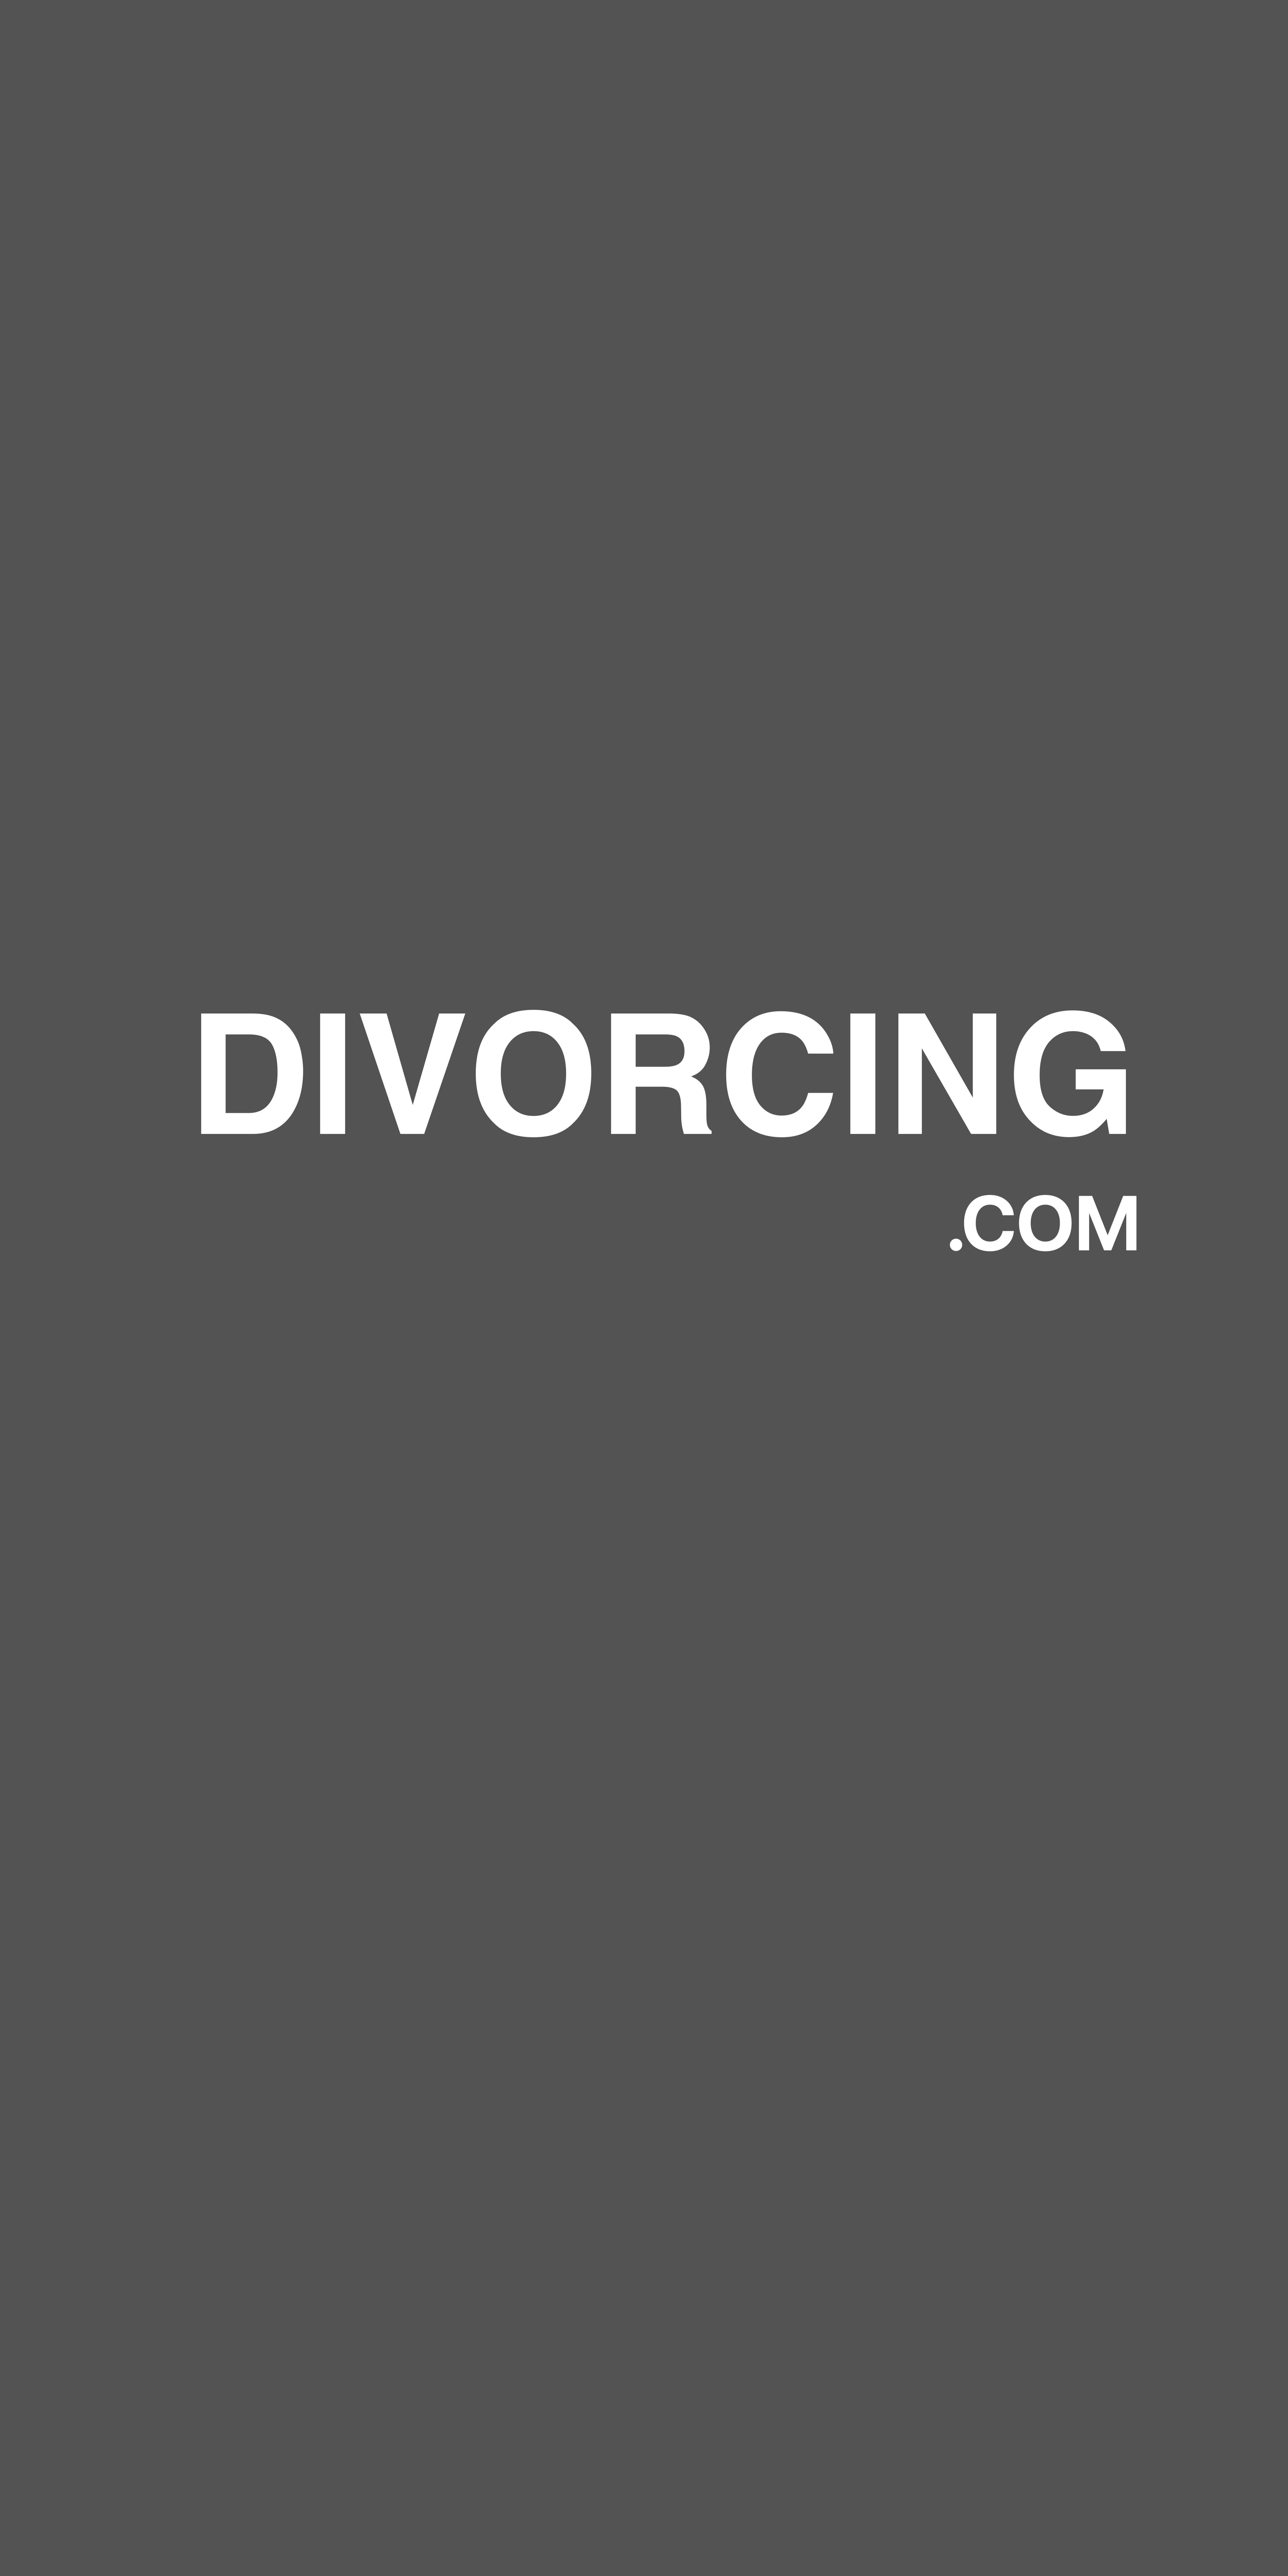 DIVORCING.COM